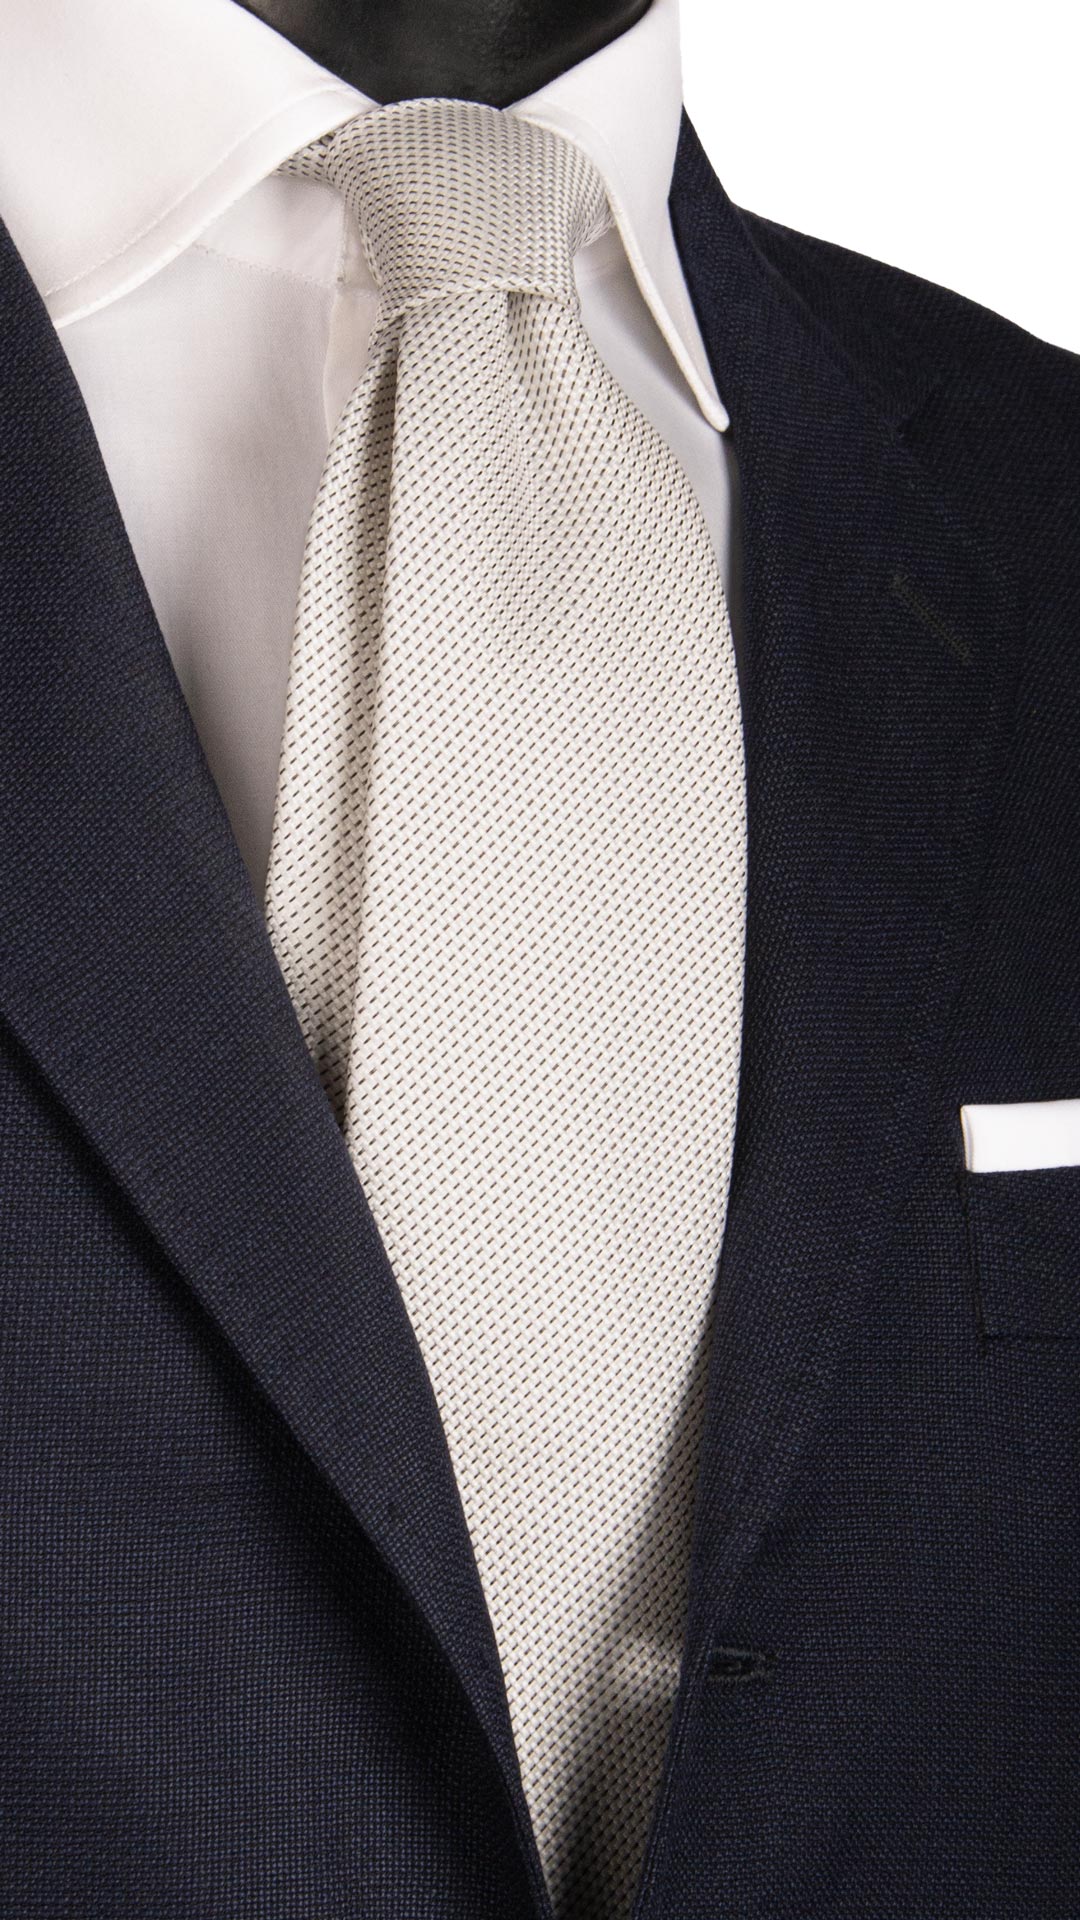 Cravatta da Cerimonia di Seta Bianca Fantasia Blu Made in Italy Graffeo Cravatte